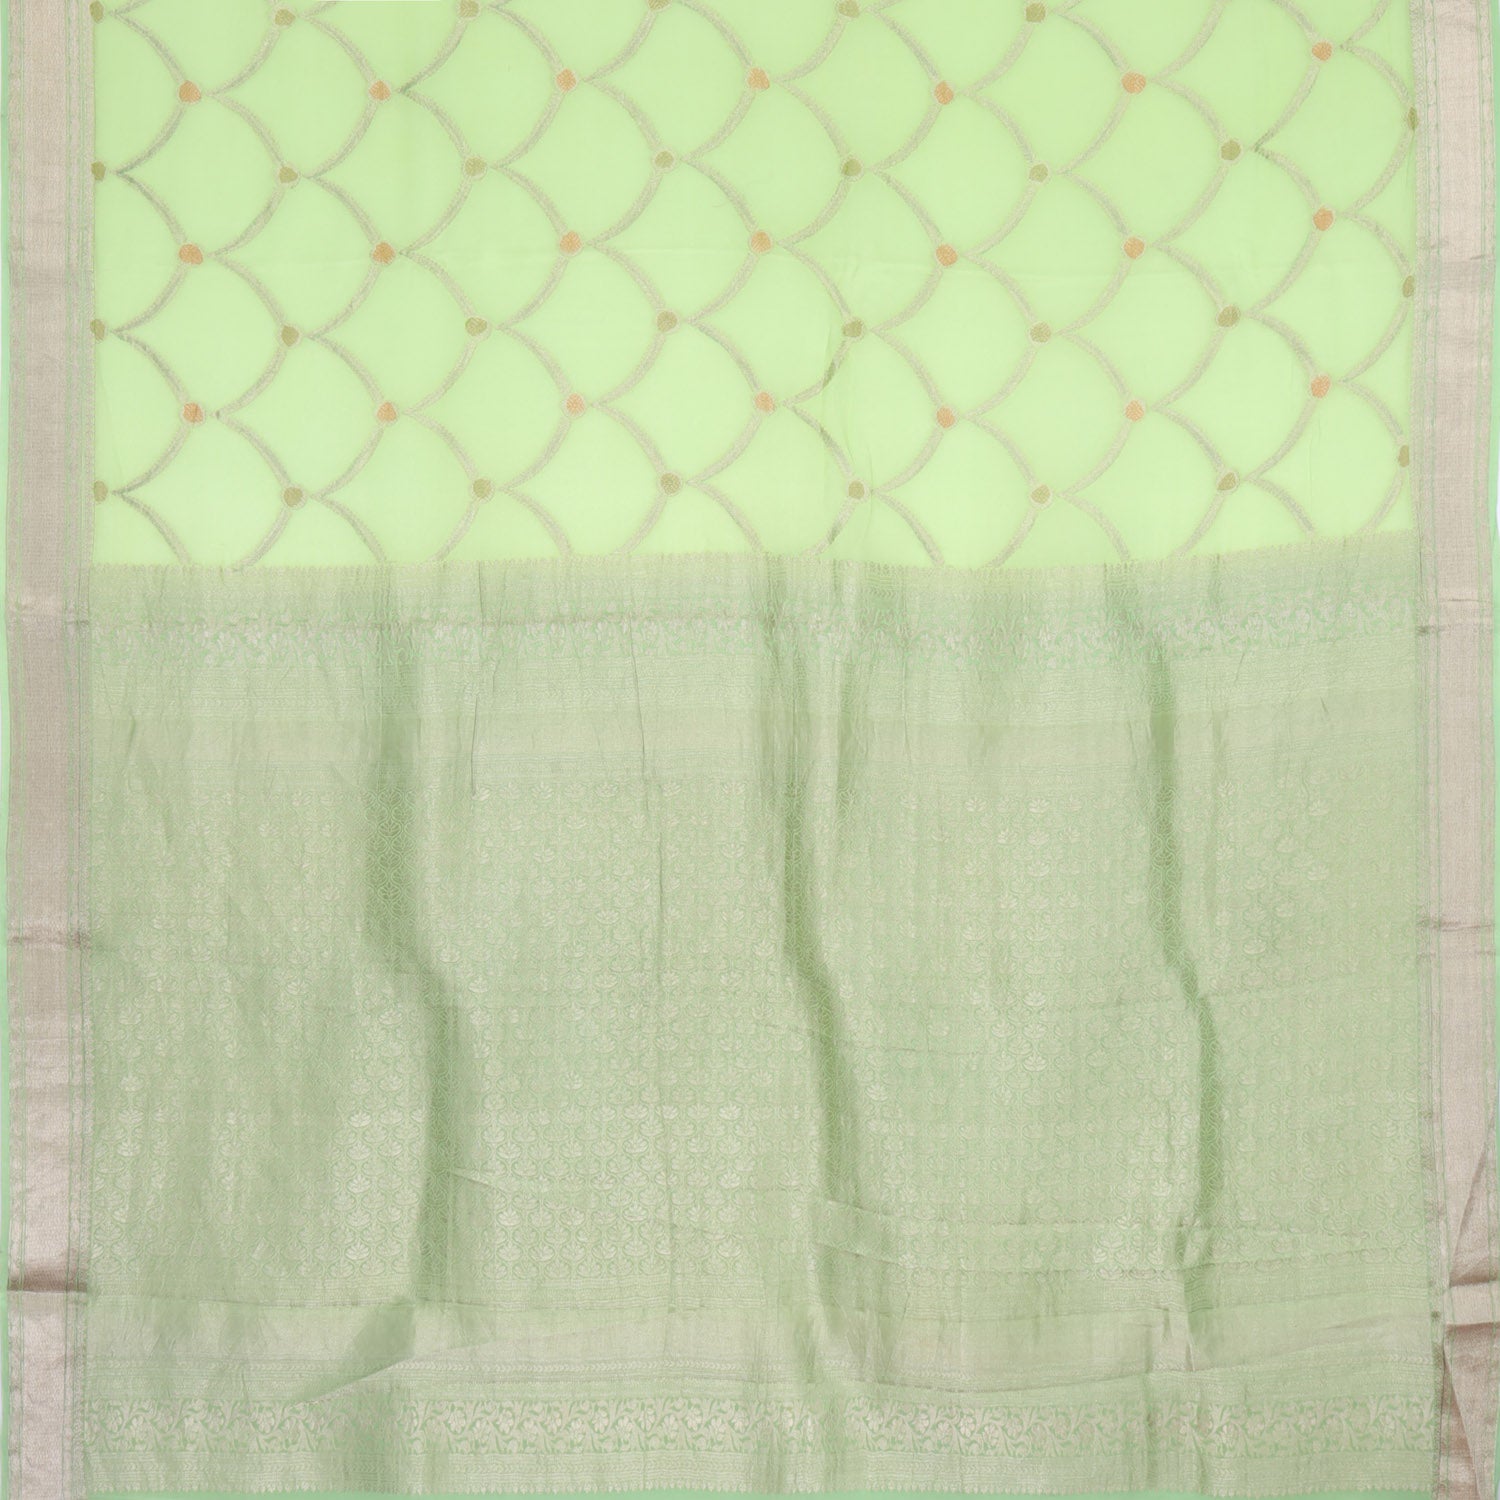 Mint Green Banarasi Silk Saree With Floral Pattern - Singhania's